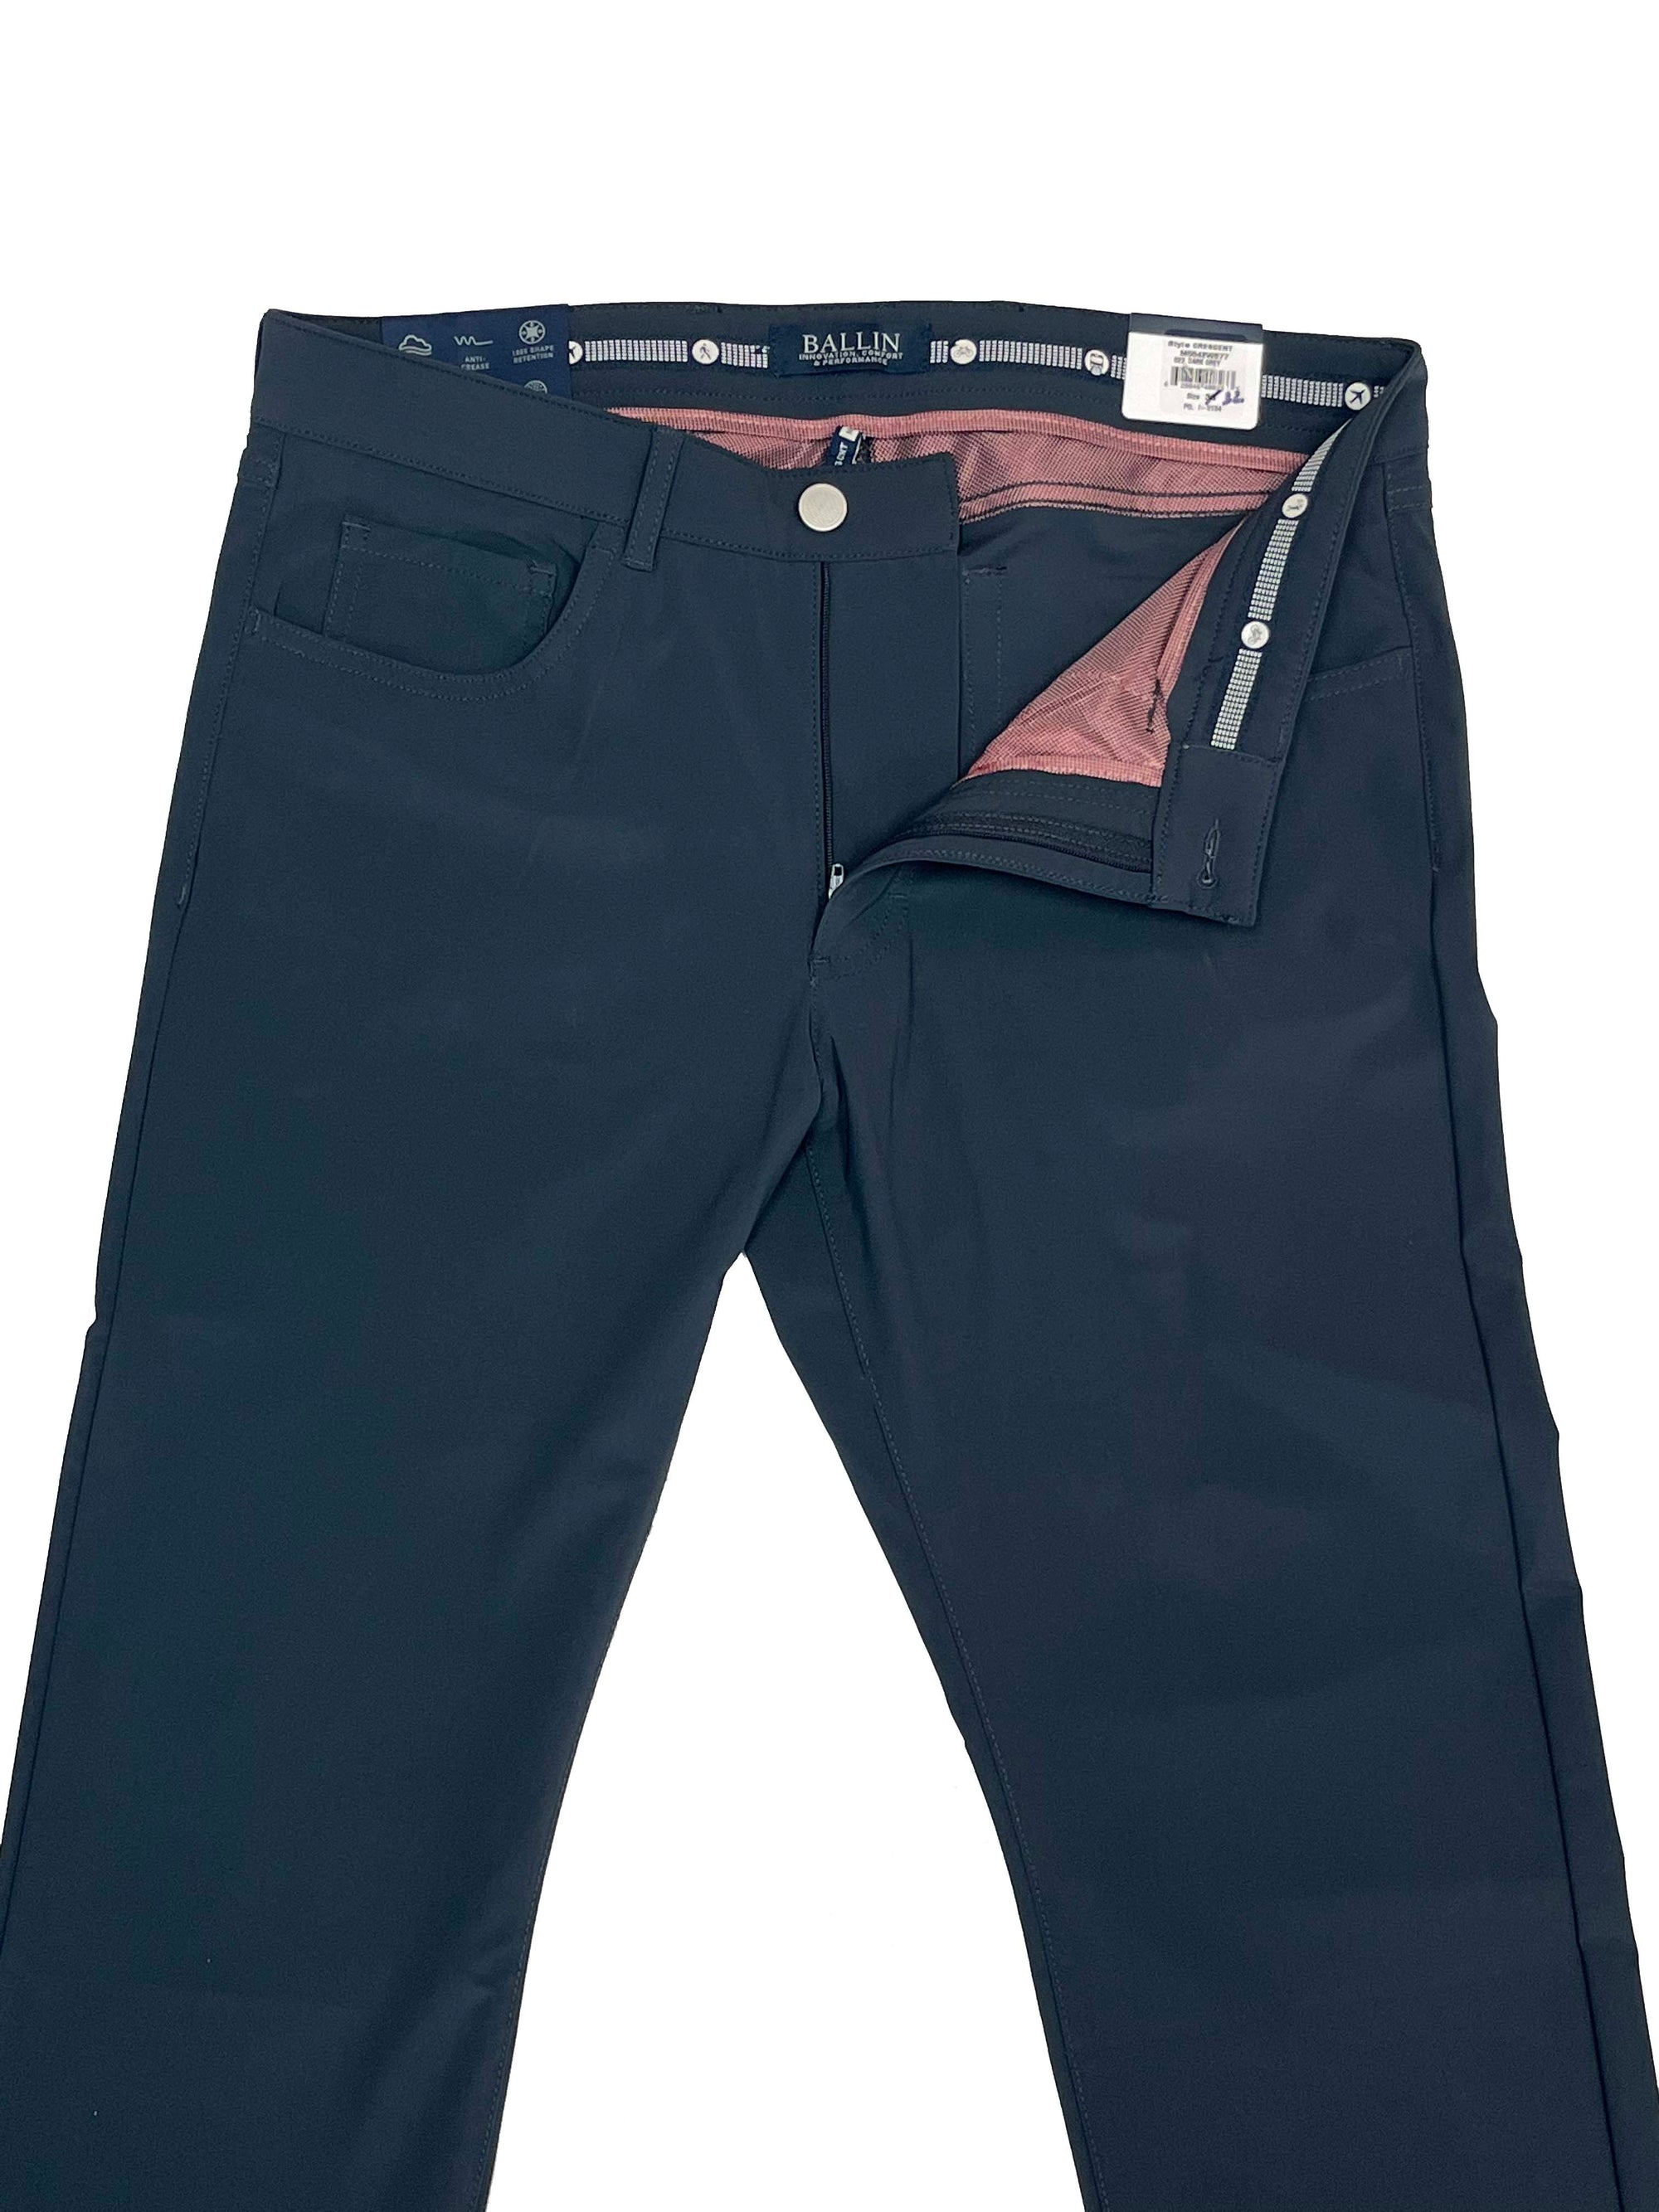 Men's Pants, Crescent Comfort Ultra Soft 5-Pocket Pant - Khaki